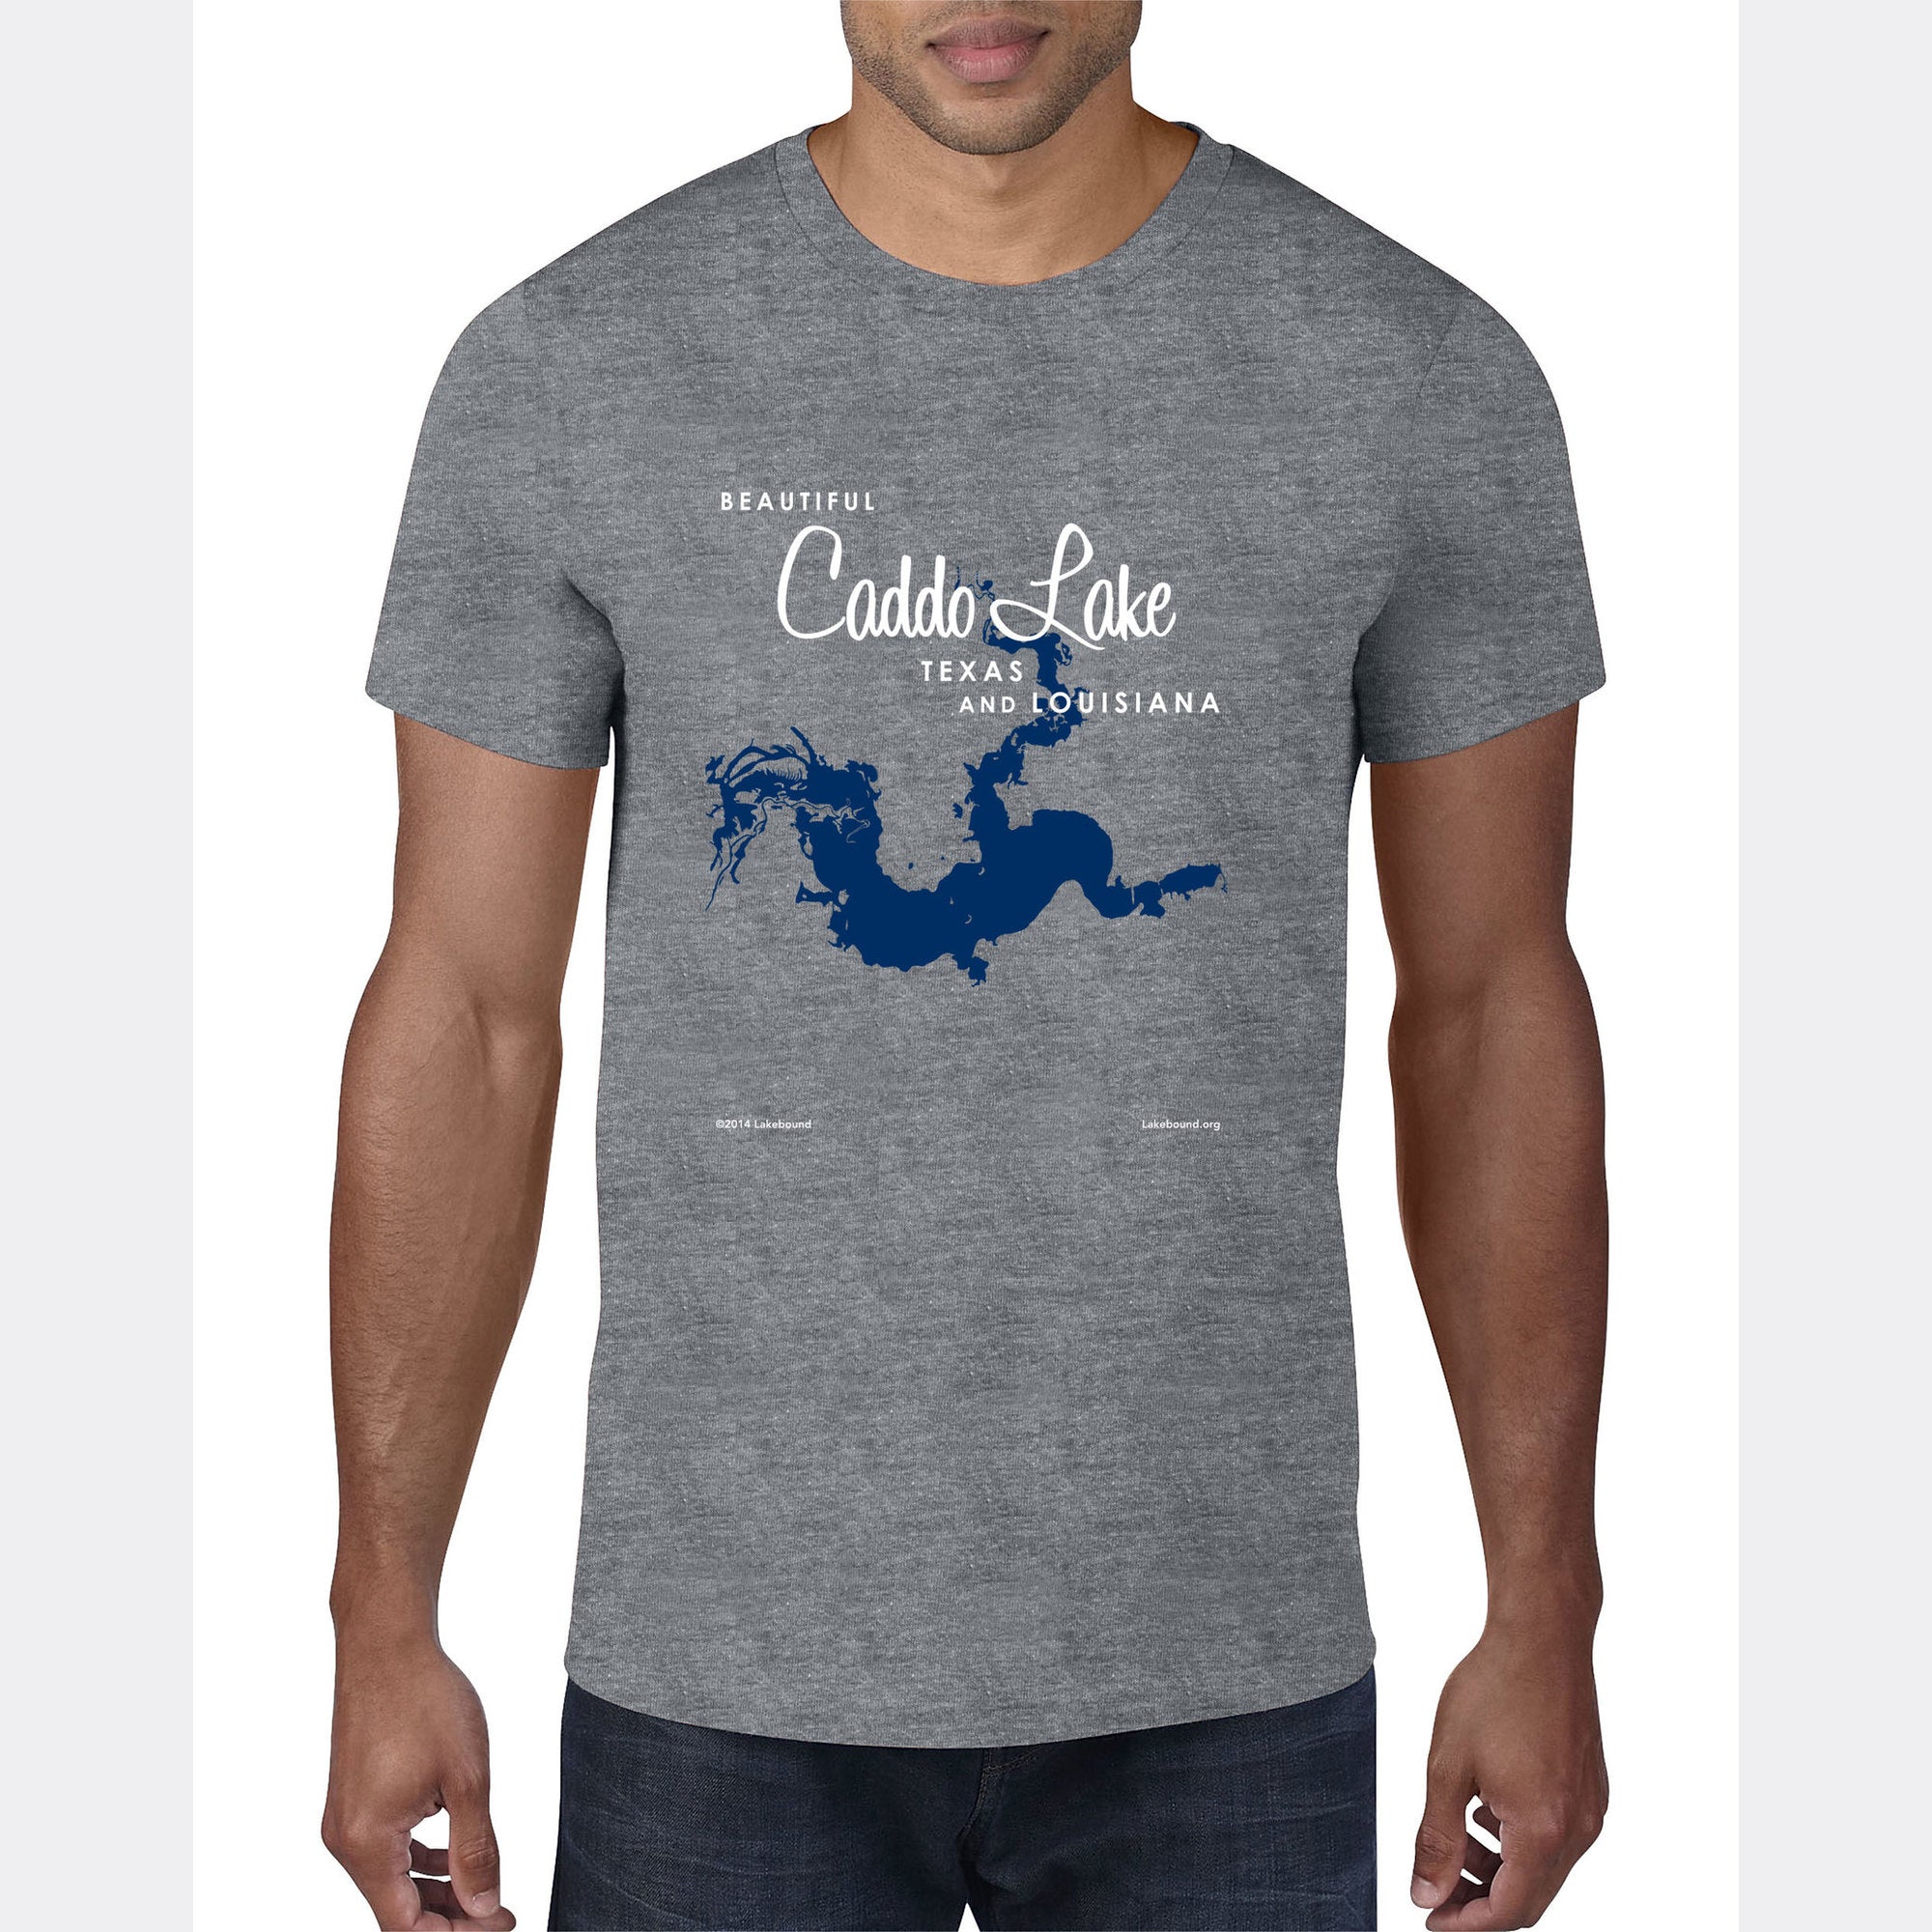 Caddo Lake Texas Louisiana, T-Shirt